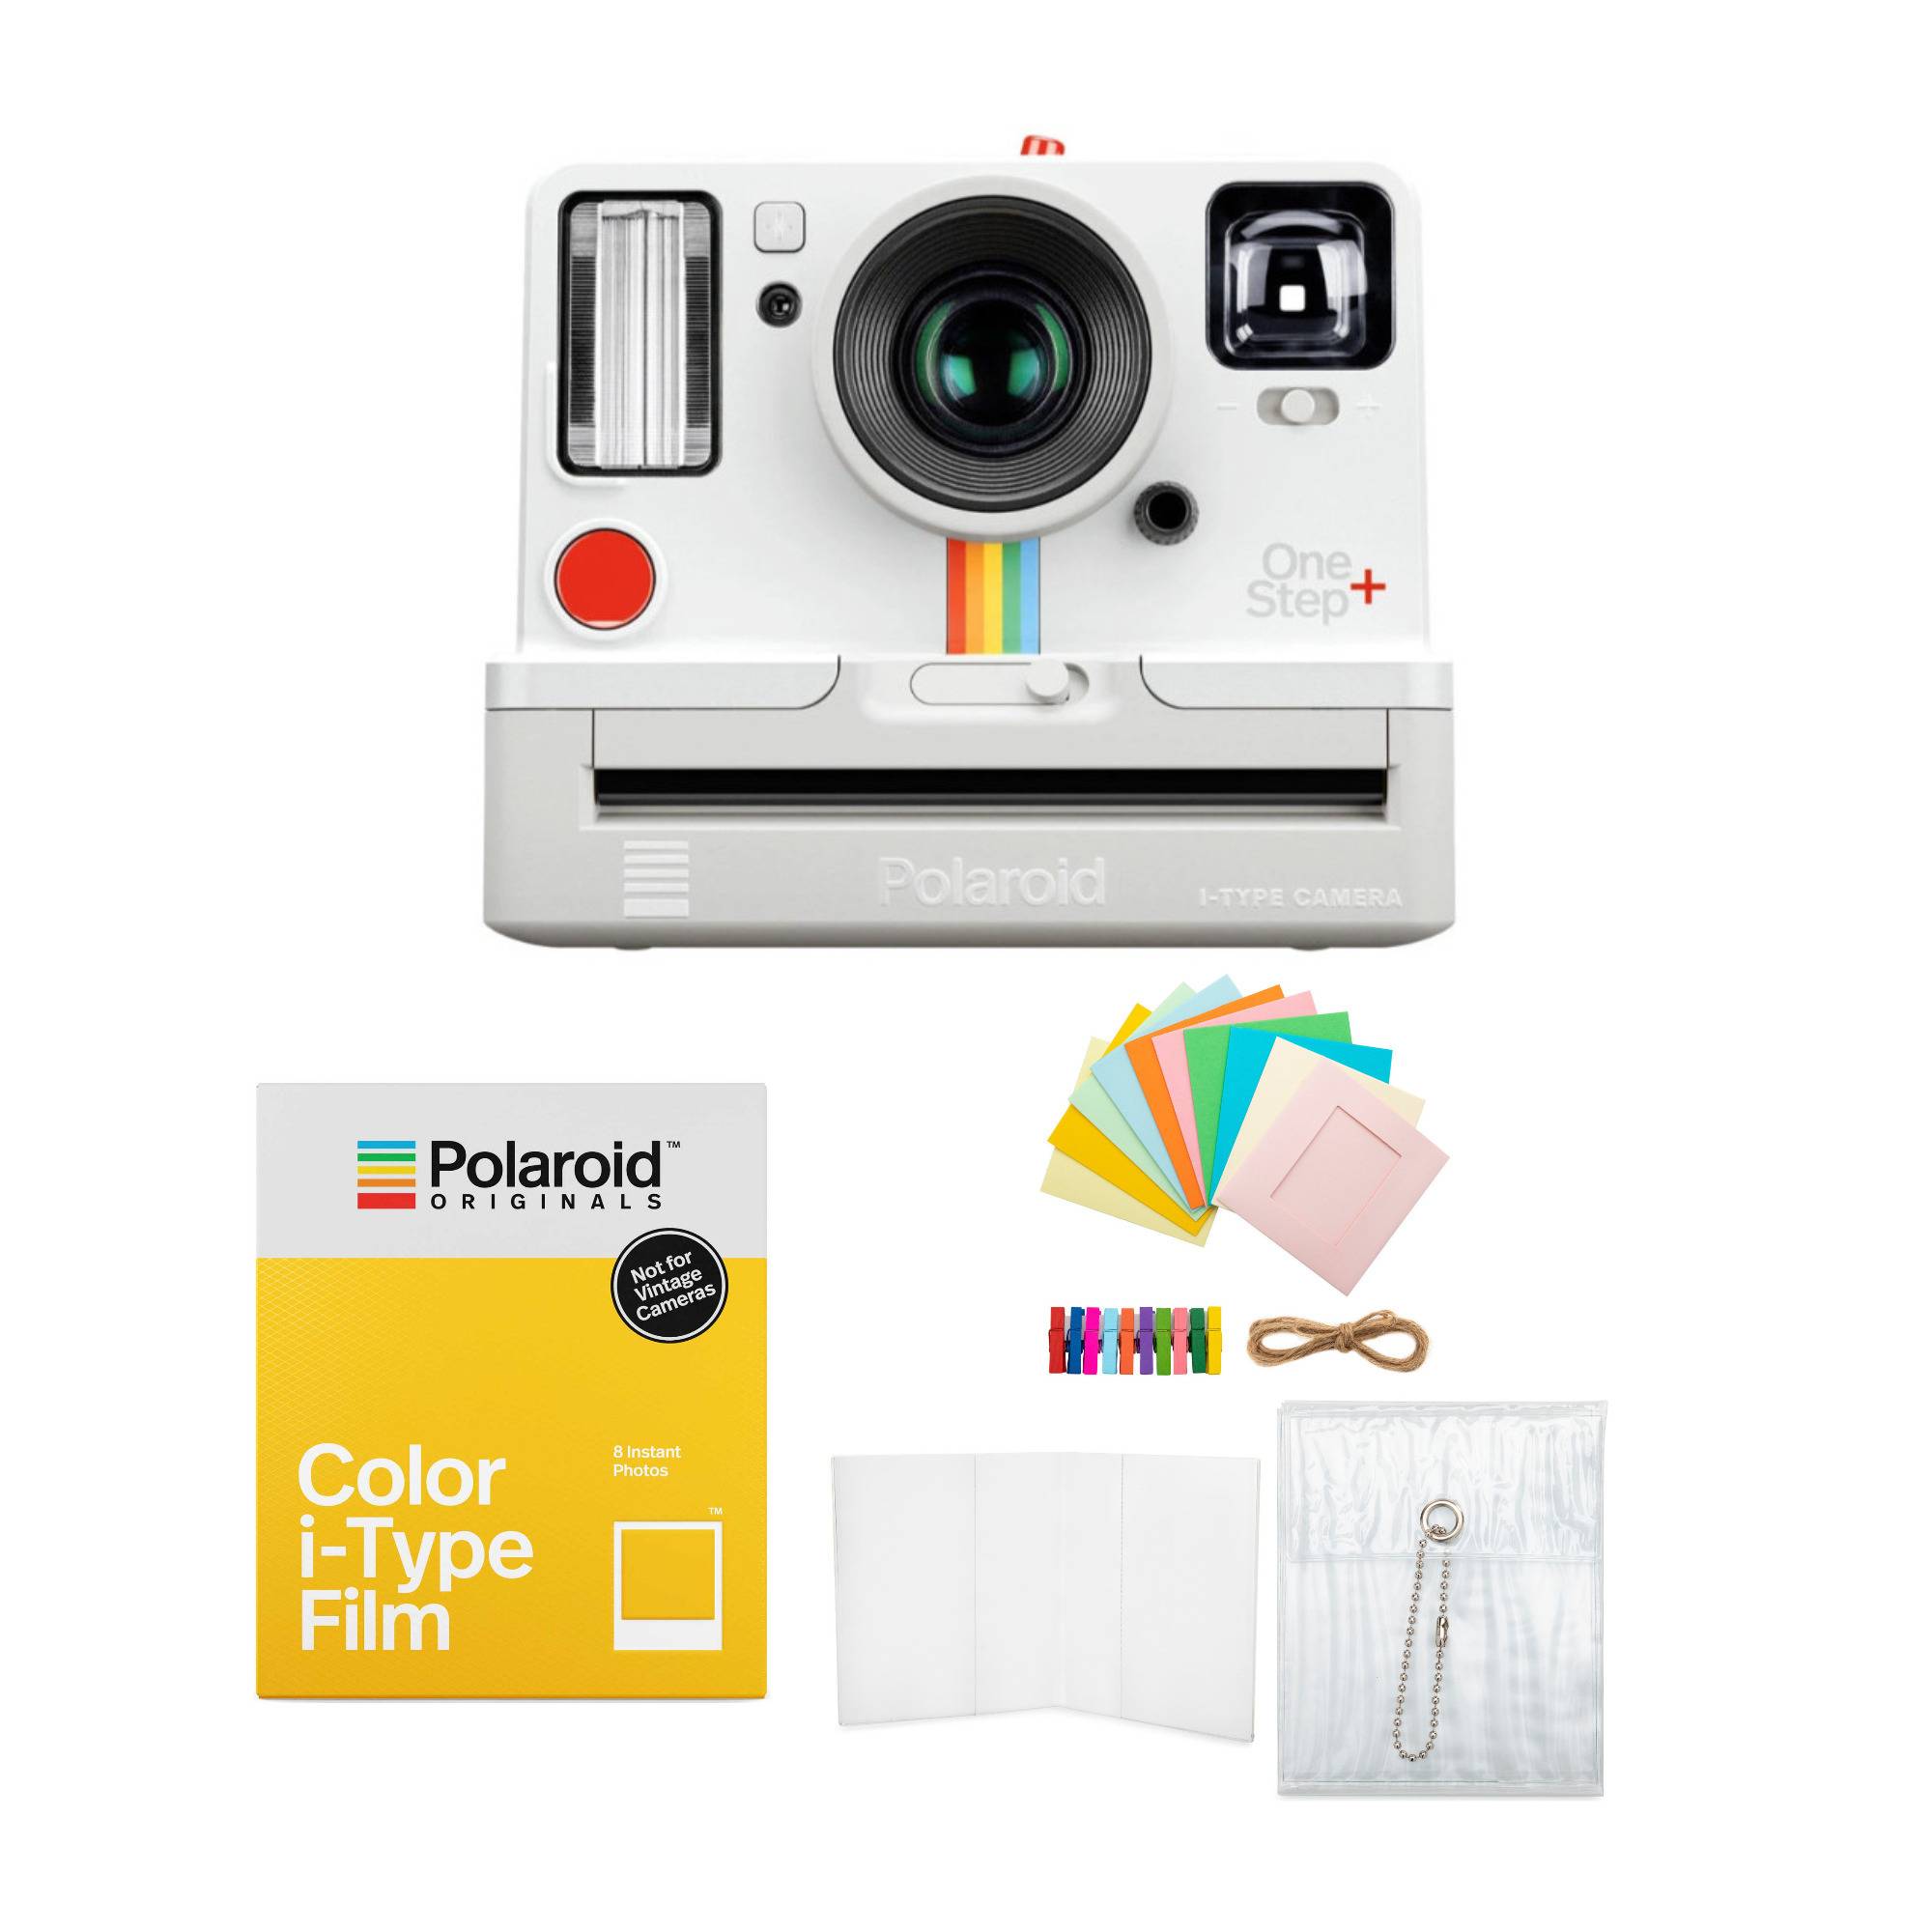 Polaroid Originals OneStep+ Viewfinder i-Type Camera (White) with i-Type Color Film Bundle